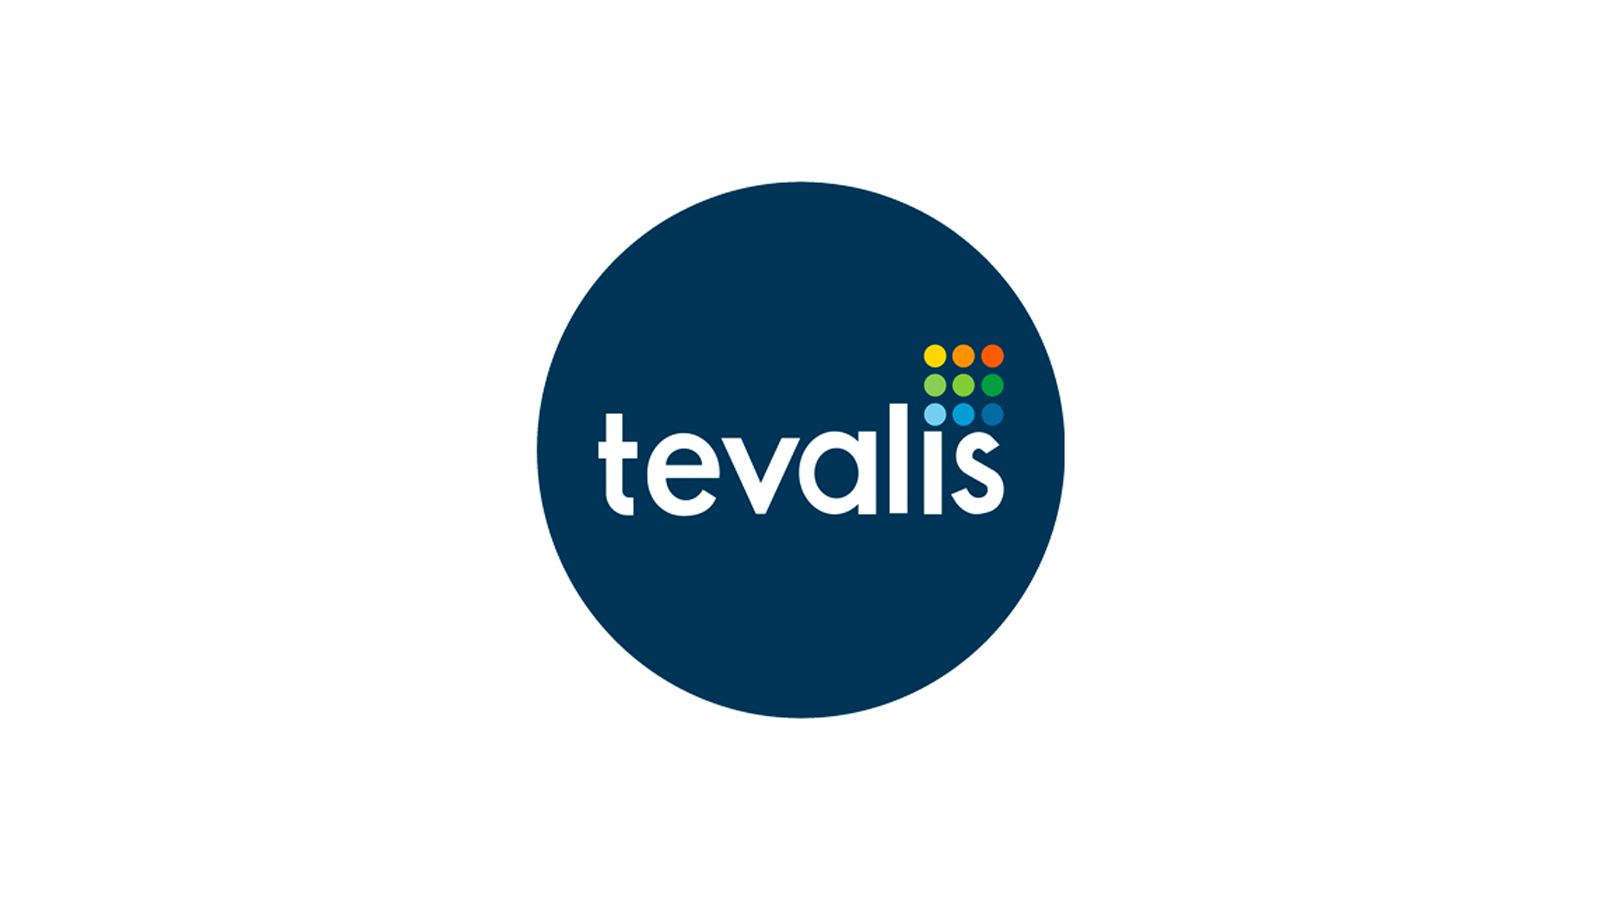 Partnership with Tevalis